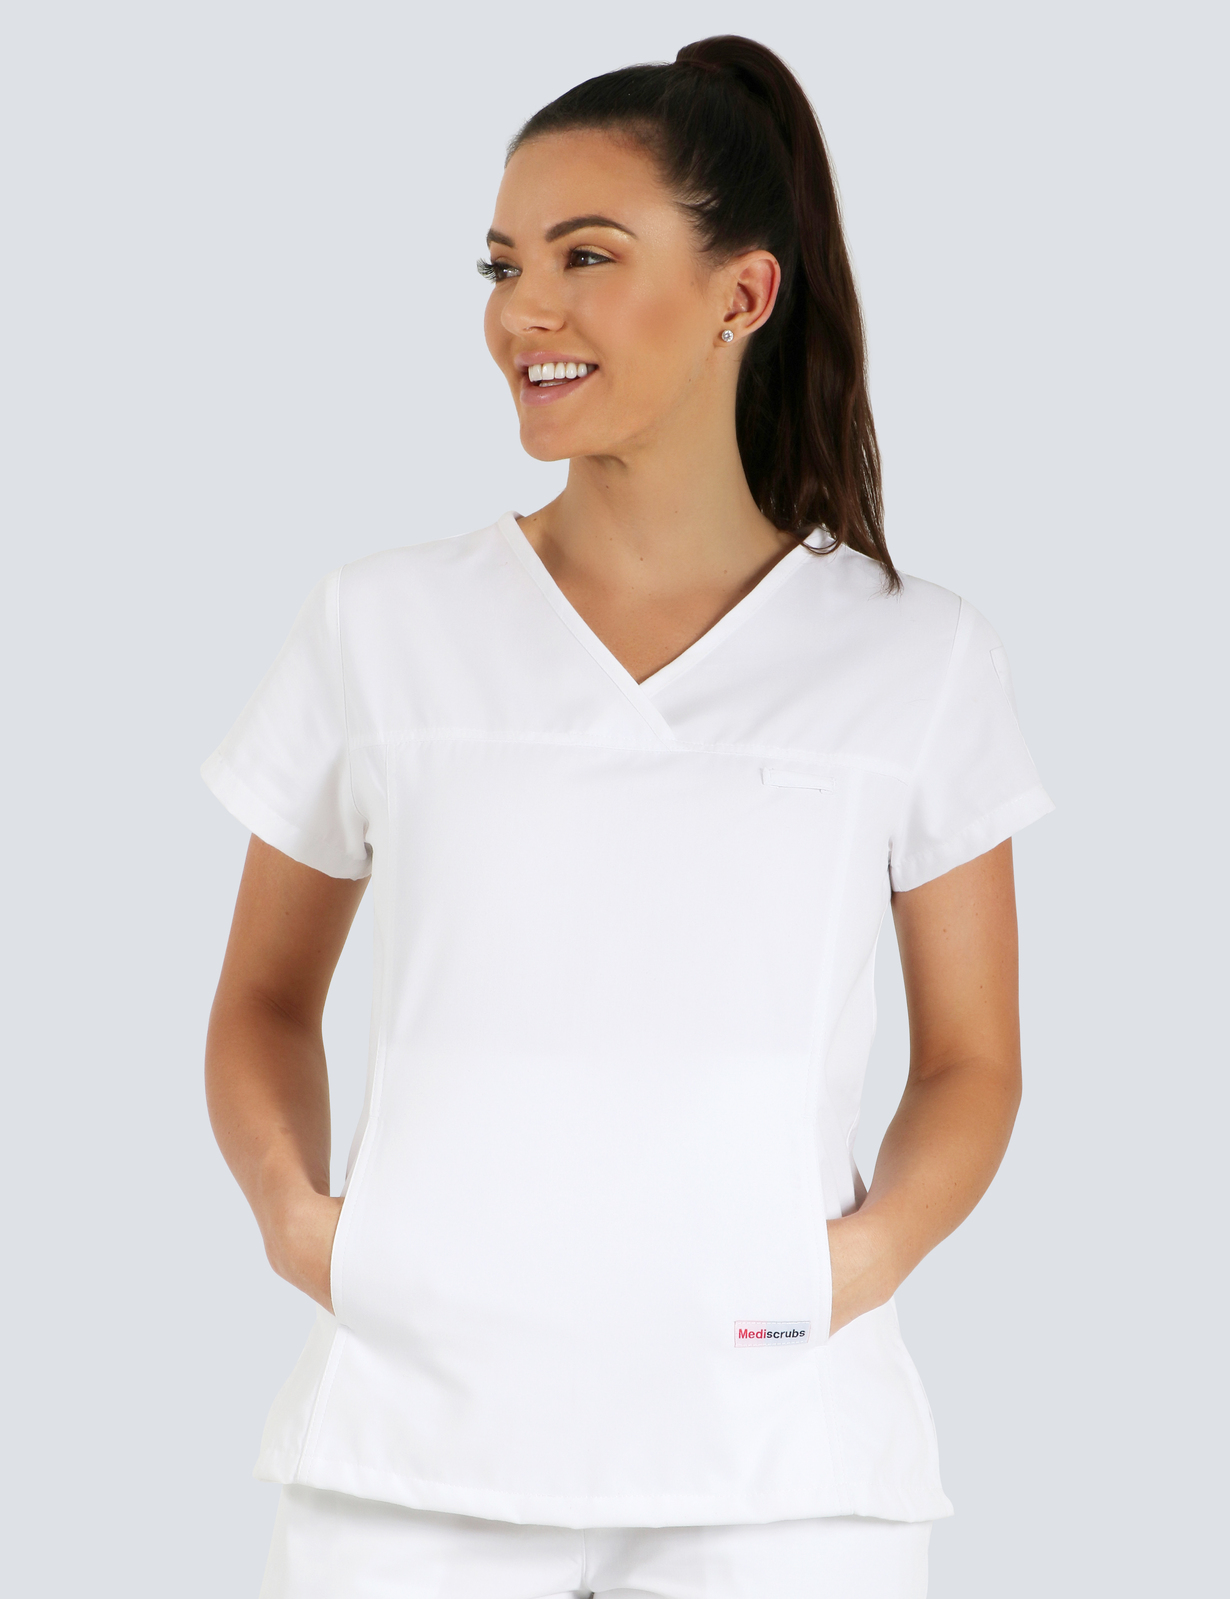 Queensland Children's Hospital Emergency Department Doctor Uniform Top Bundle (Women's Fit Top in White  incl Logos)